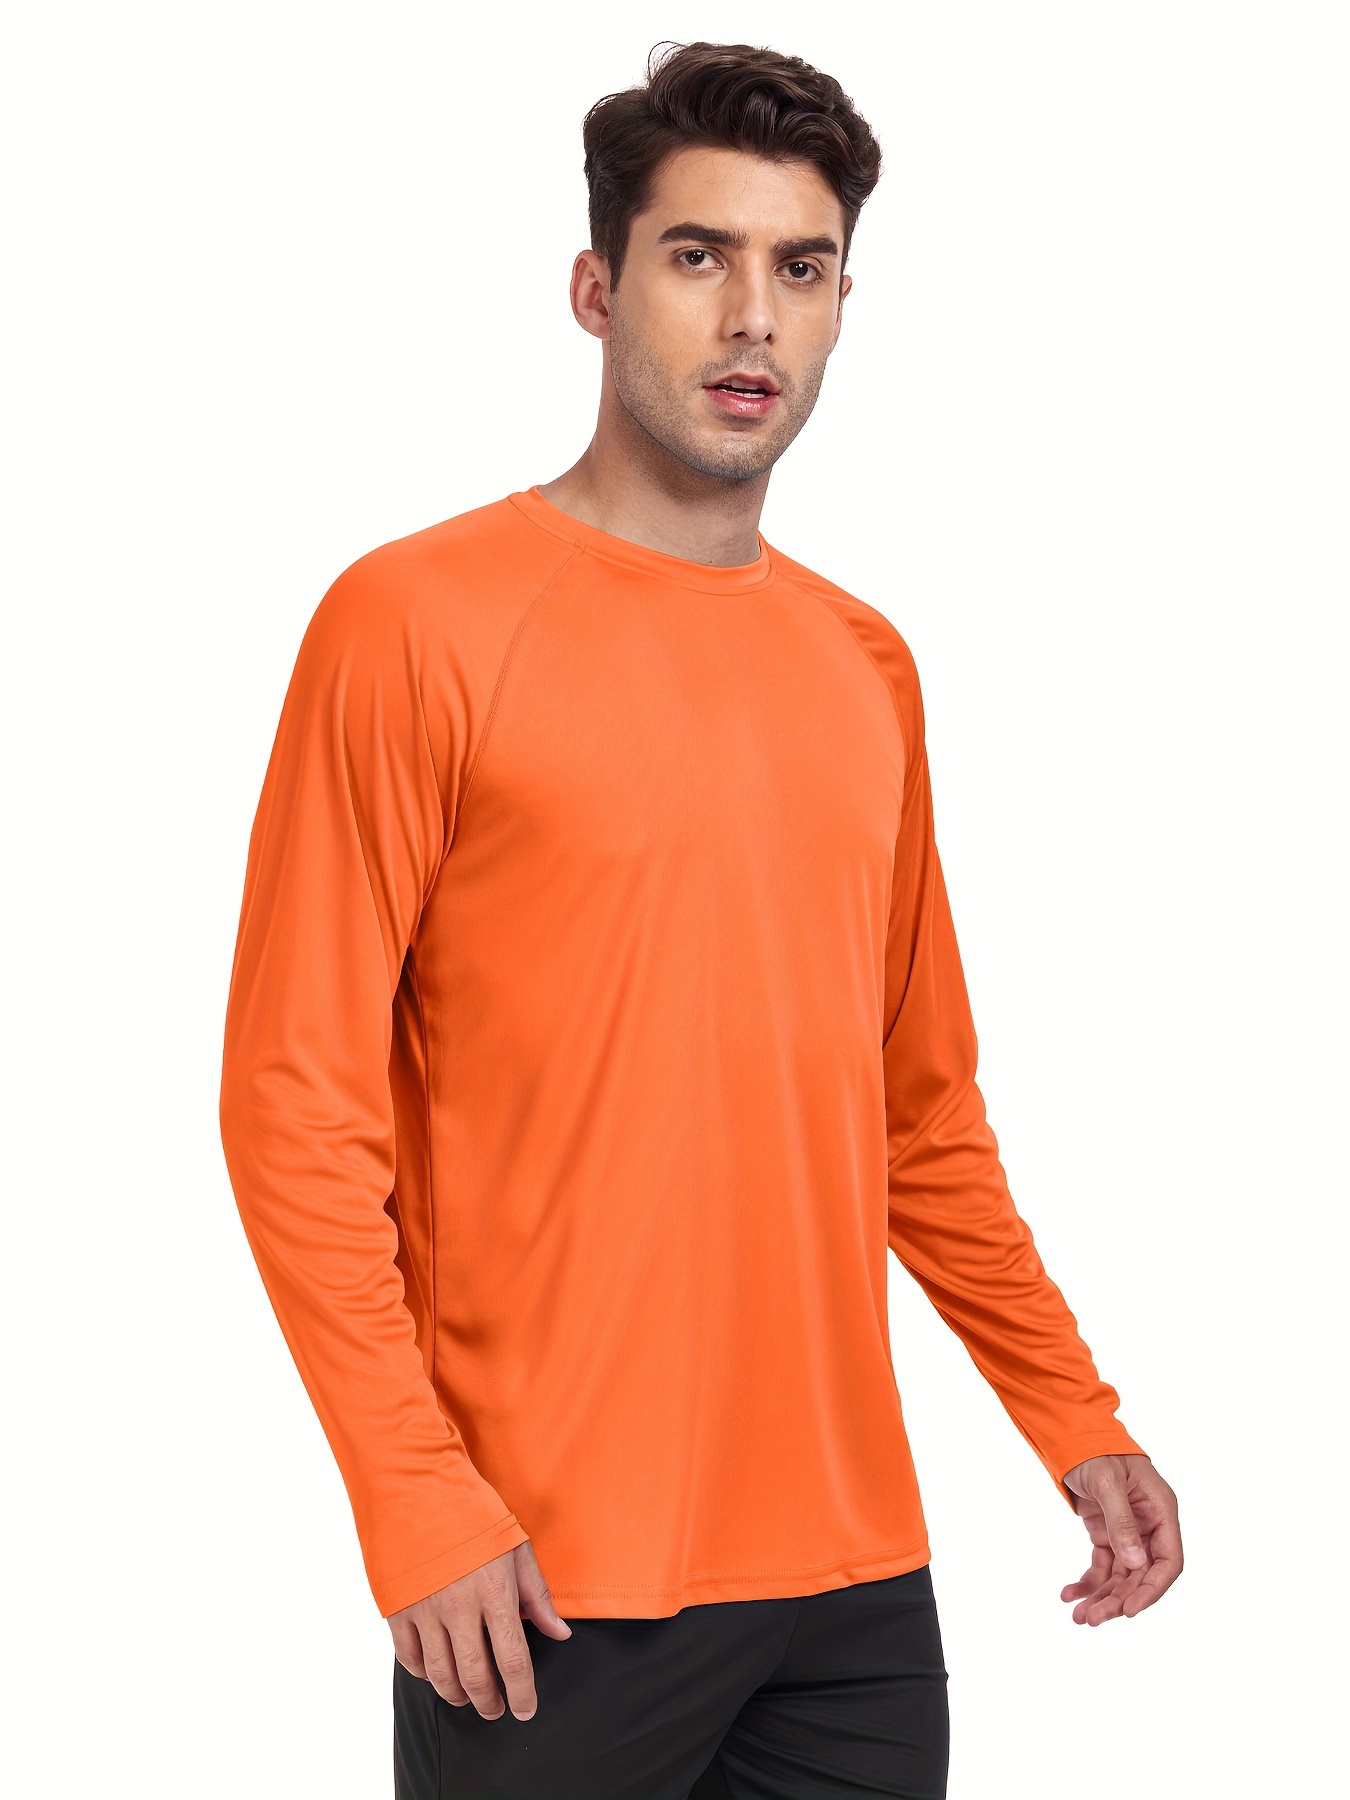 Sun Orange Long Sleeve Uv Protection Shirt Fishing Sun Shirt